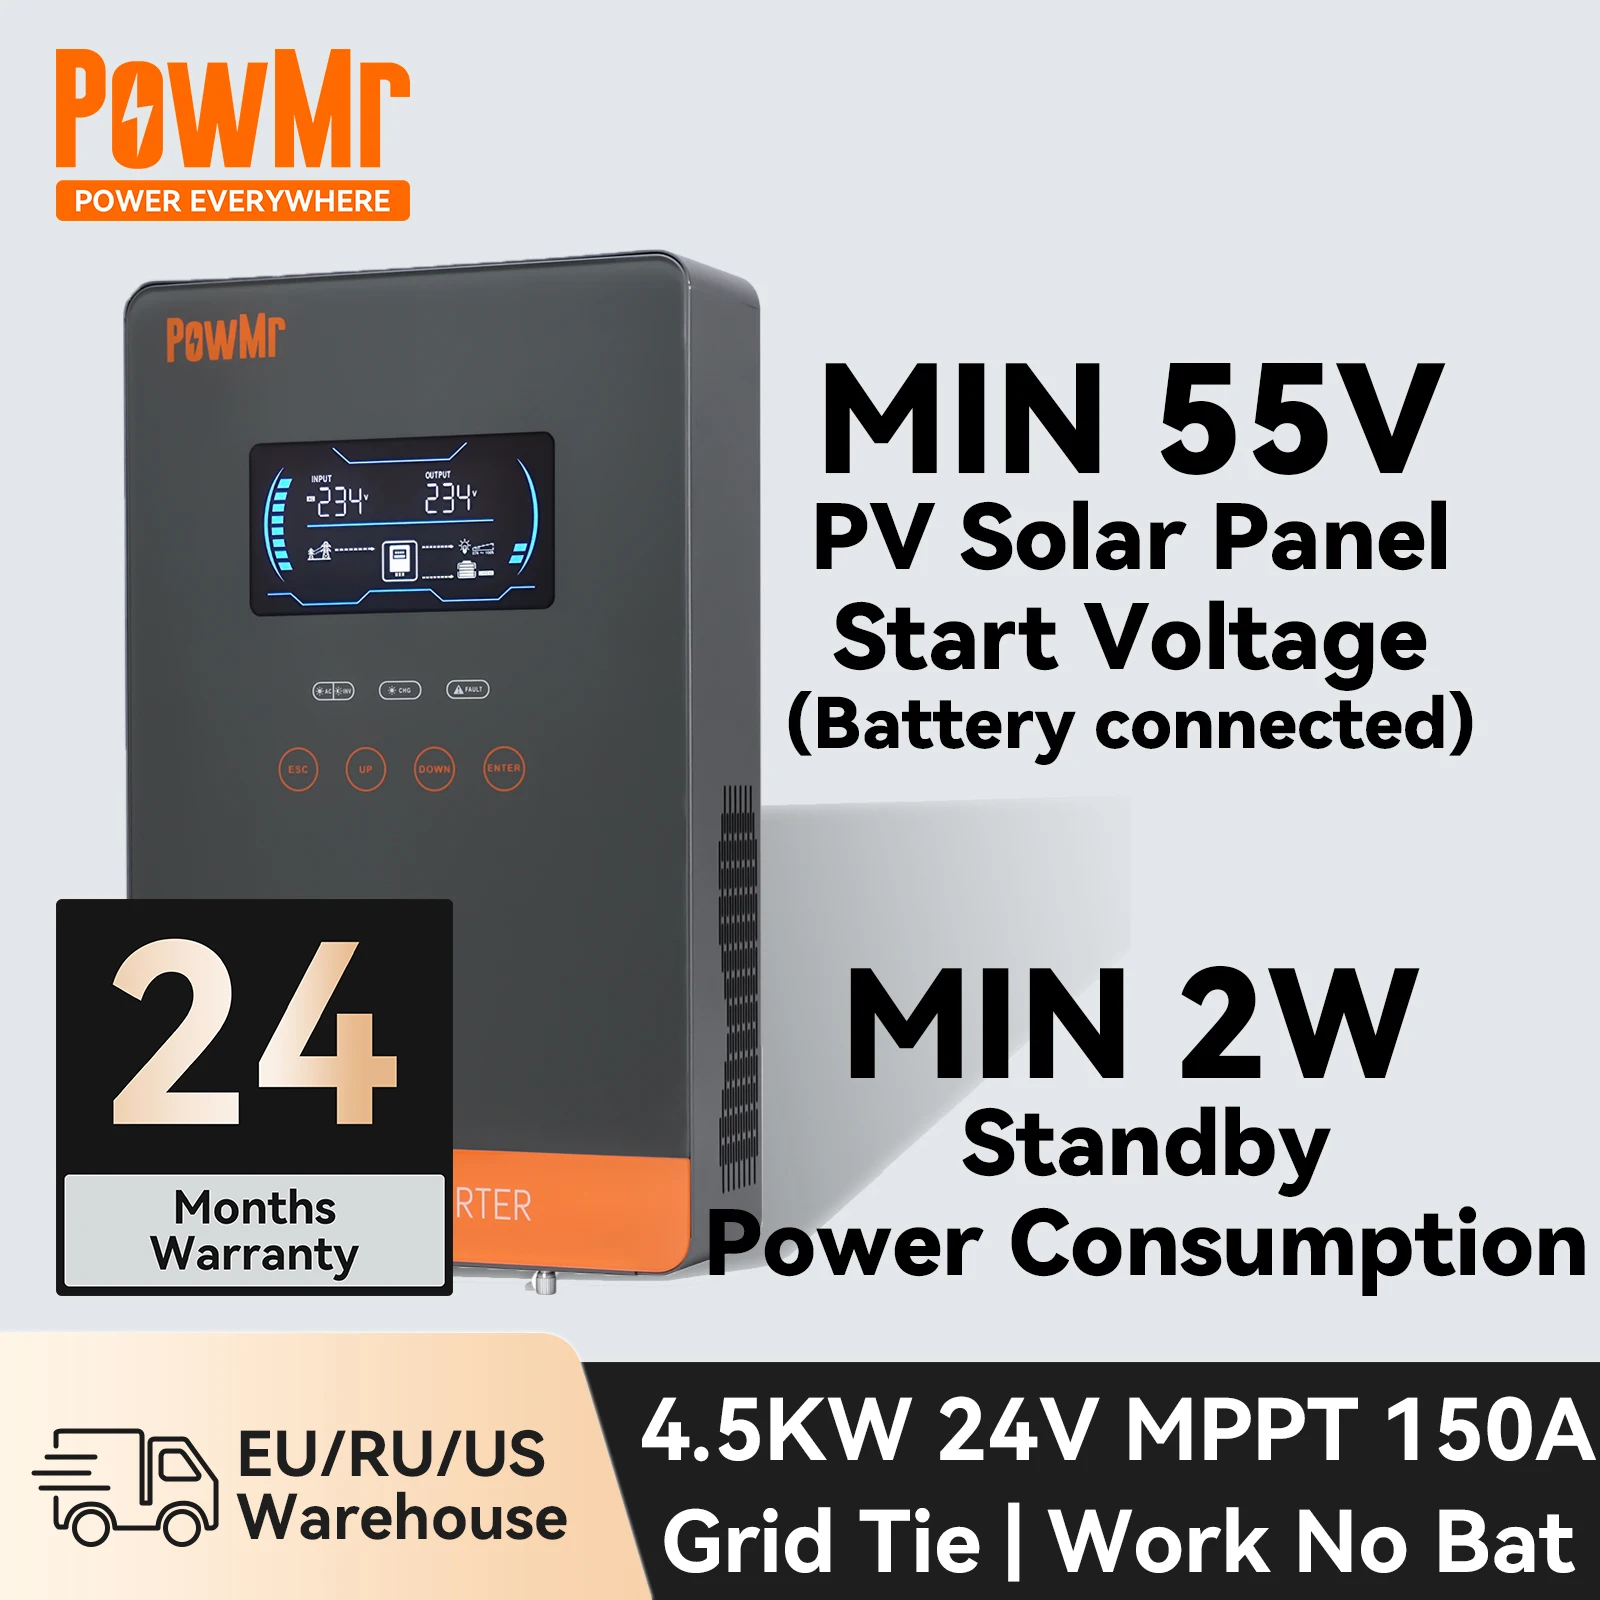 PowMr 24V MPPT 150A ON OFF Grid Solar Inverter Hybrid Pure Sine Wave Lithium-Iron & Lead-Acid Battery PV Panel Max Power 6KW